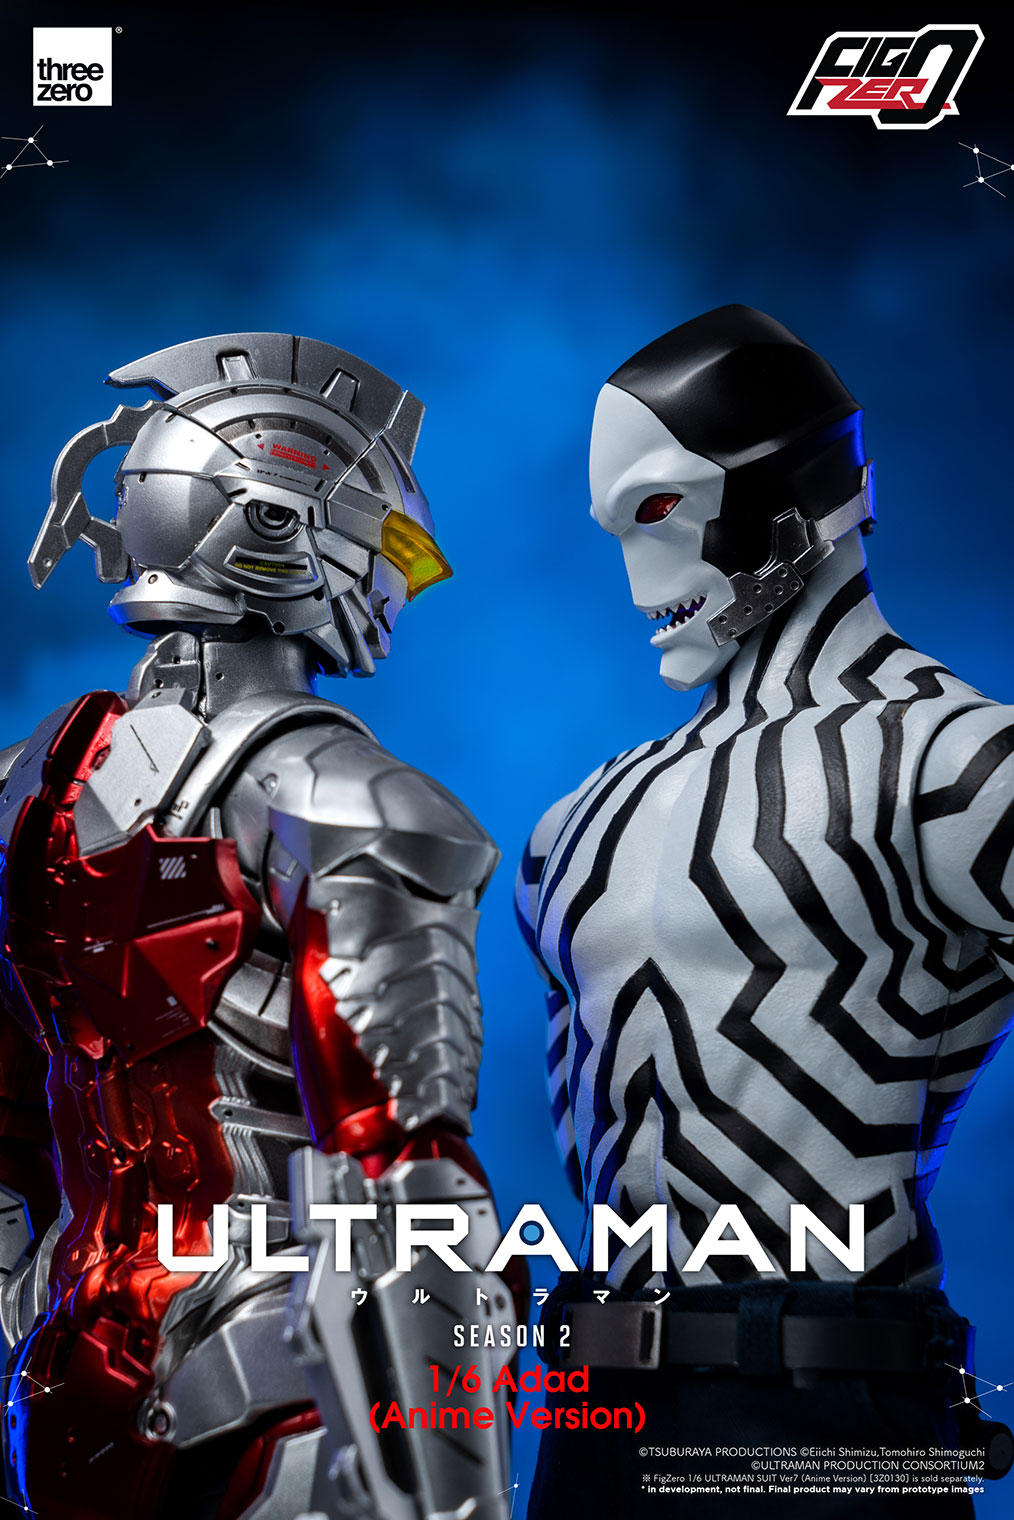 threezero - FigZero - Netflix&#39;s Ultraman Season 2 - Adad (Anime Ver.) - Marvelous Toys